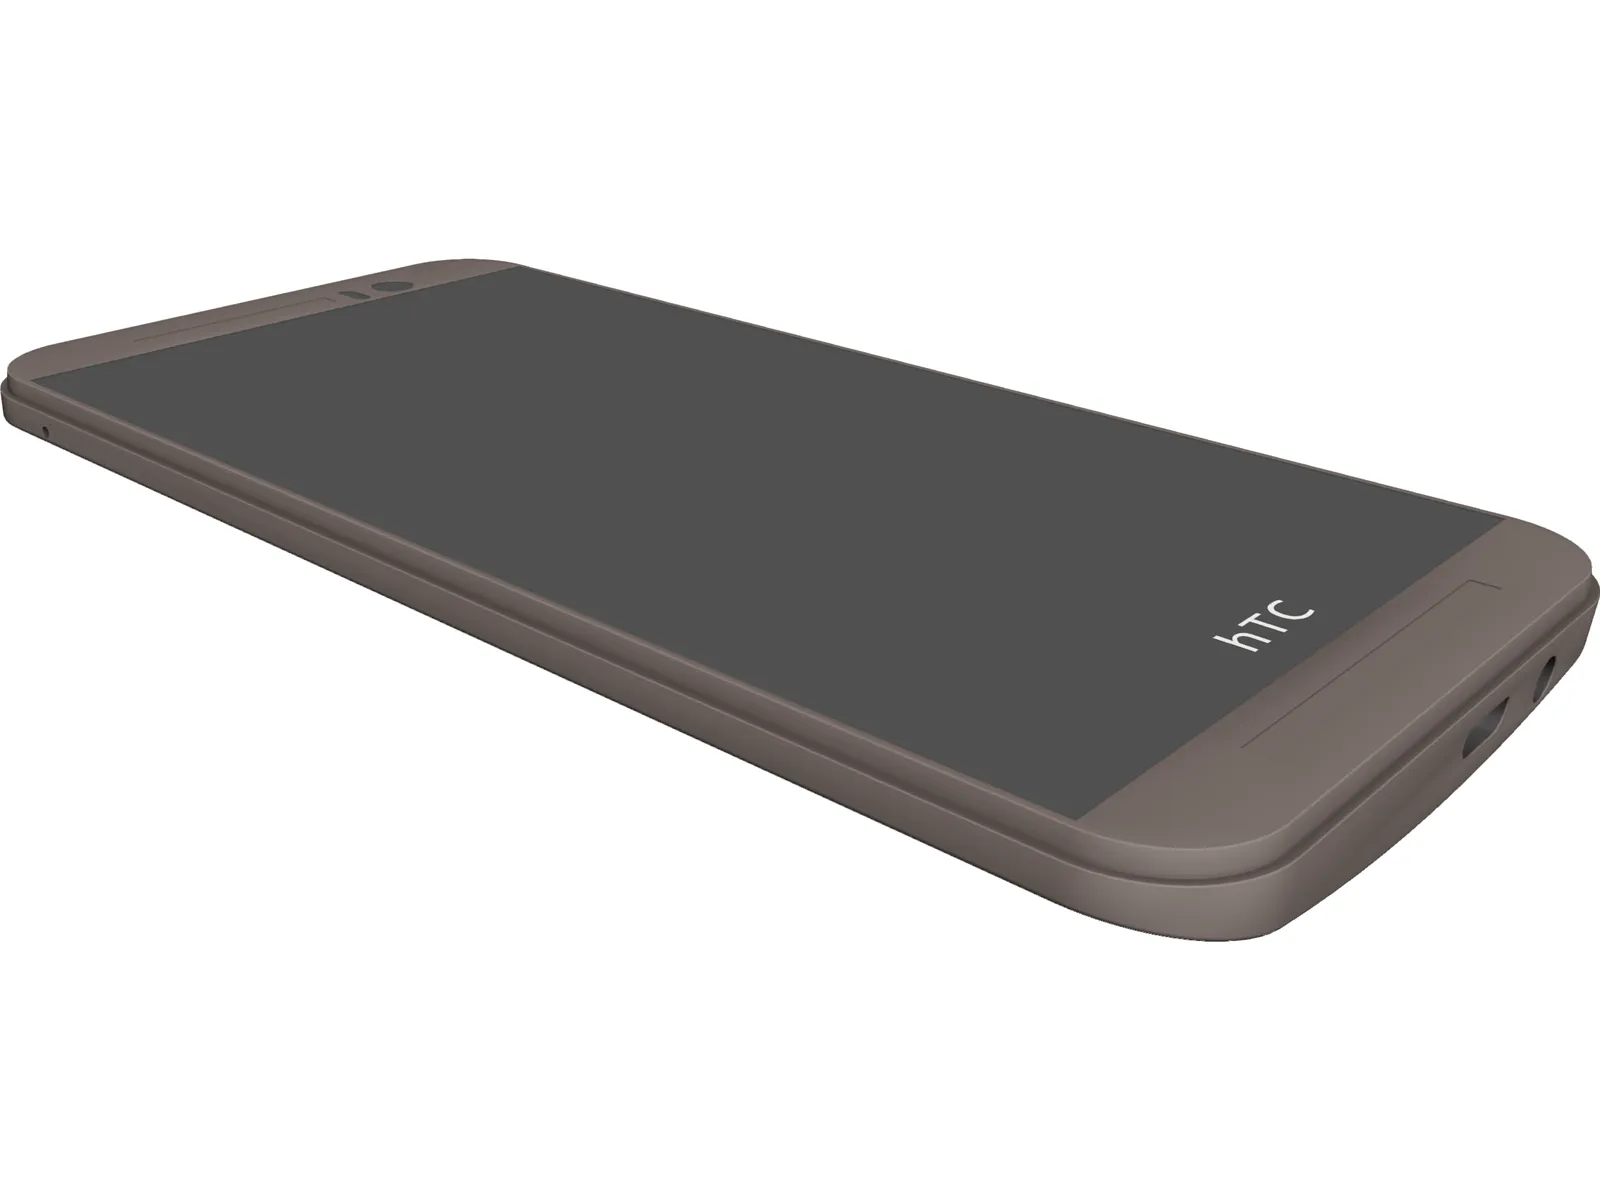 HTC One M9 3D Model